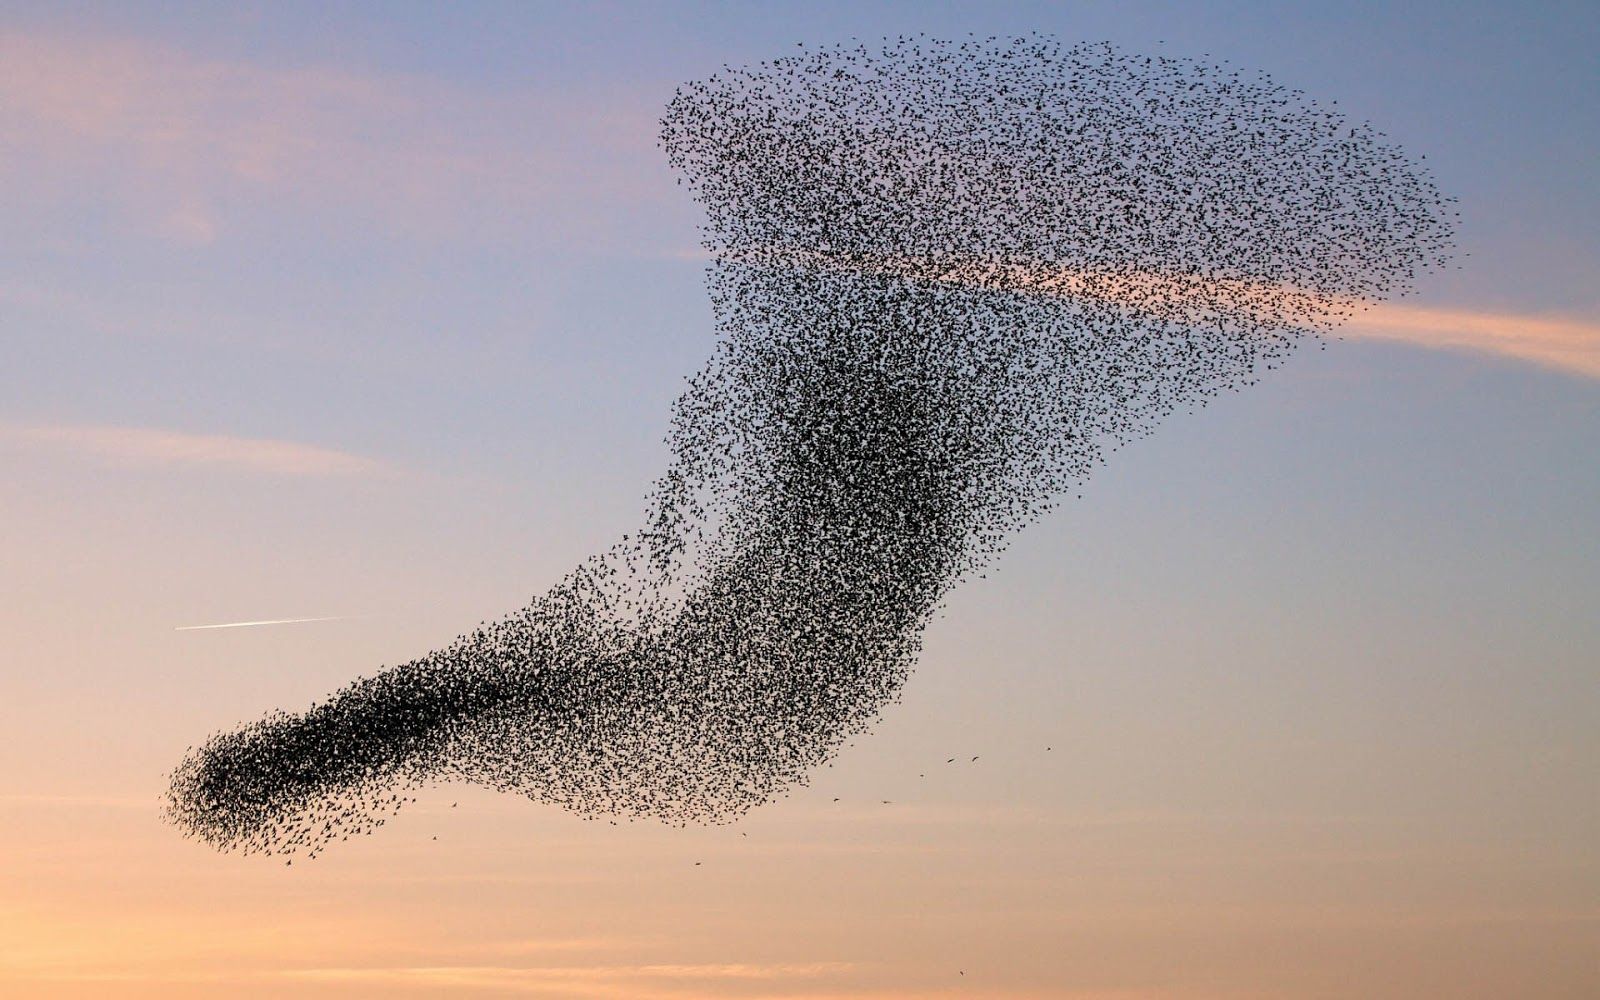 Why do birds flock together?